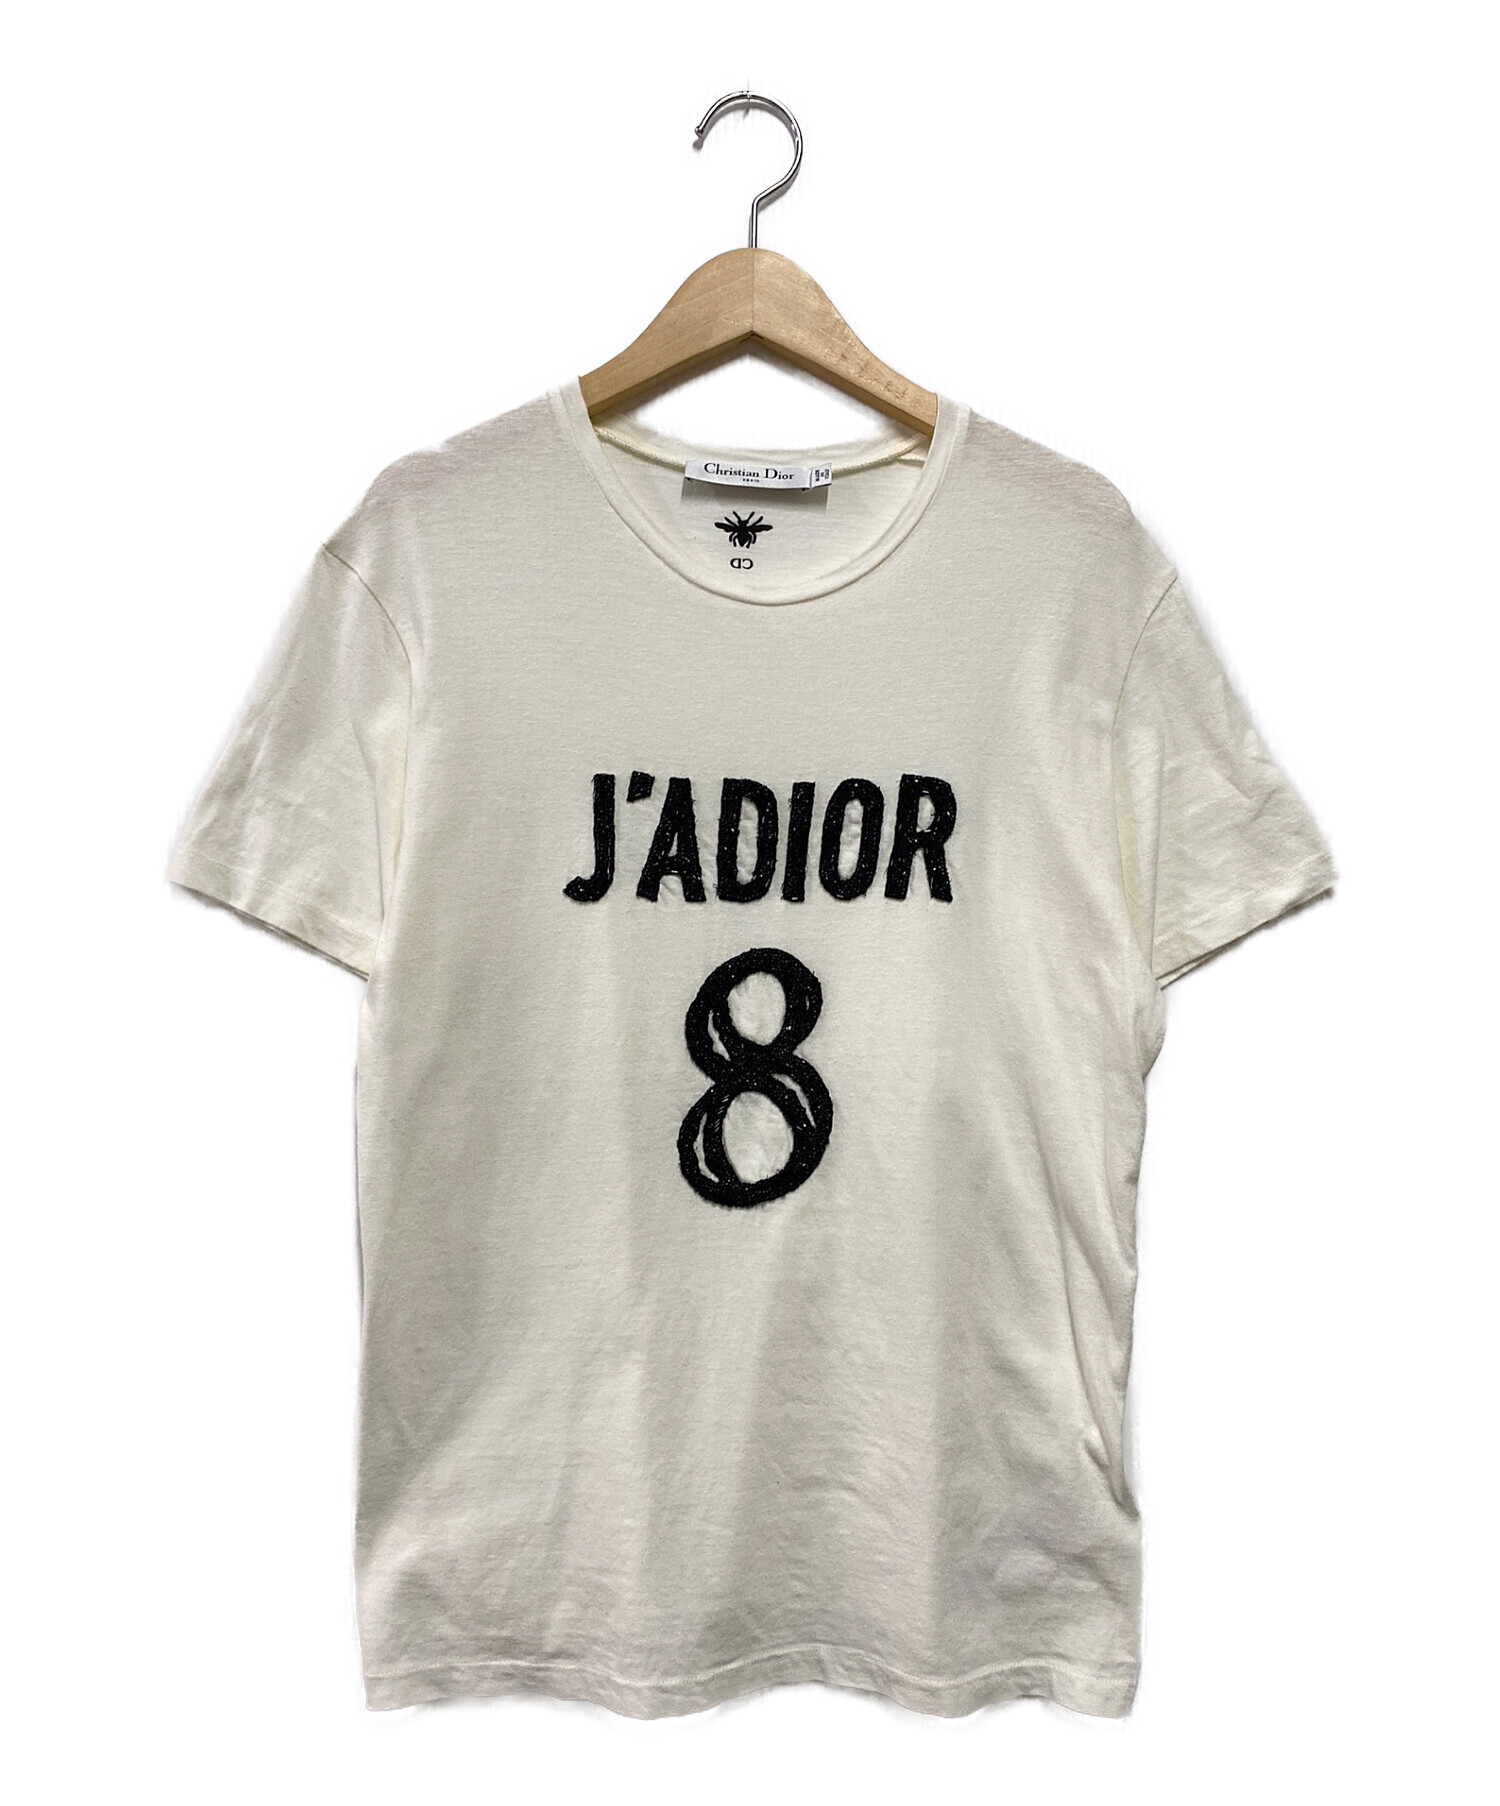 J'ADIOR 8 ディオール Tシャツ ロゴ ホワイト xs